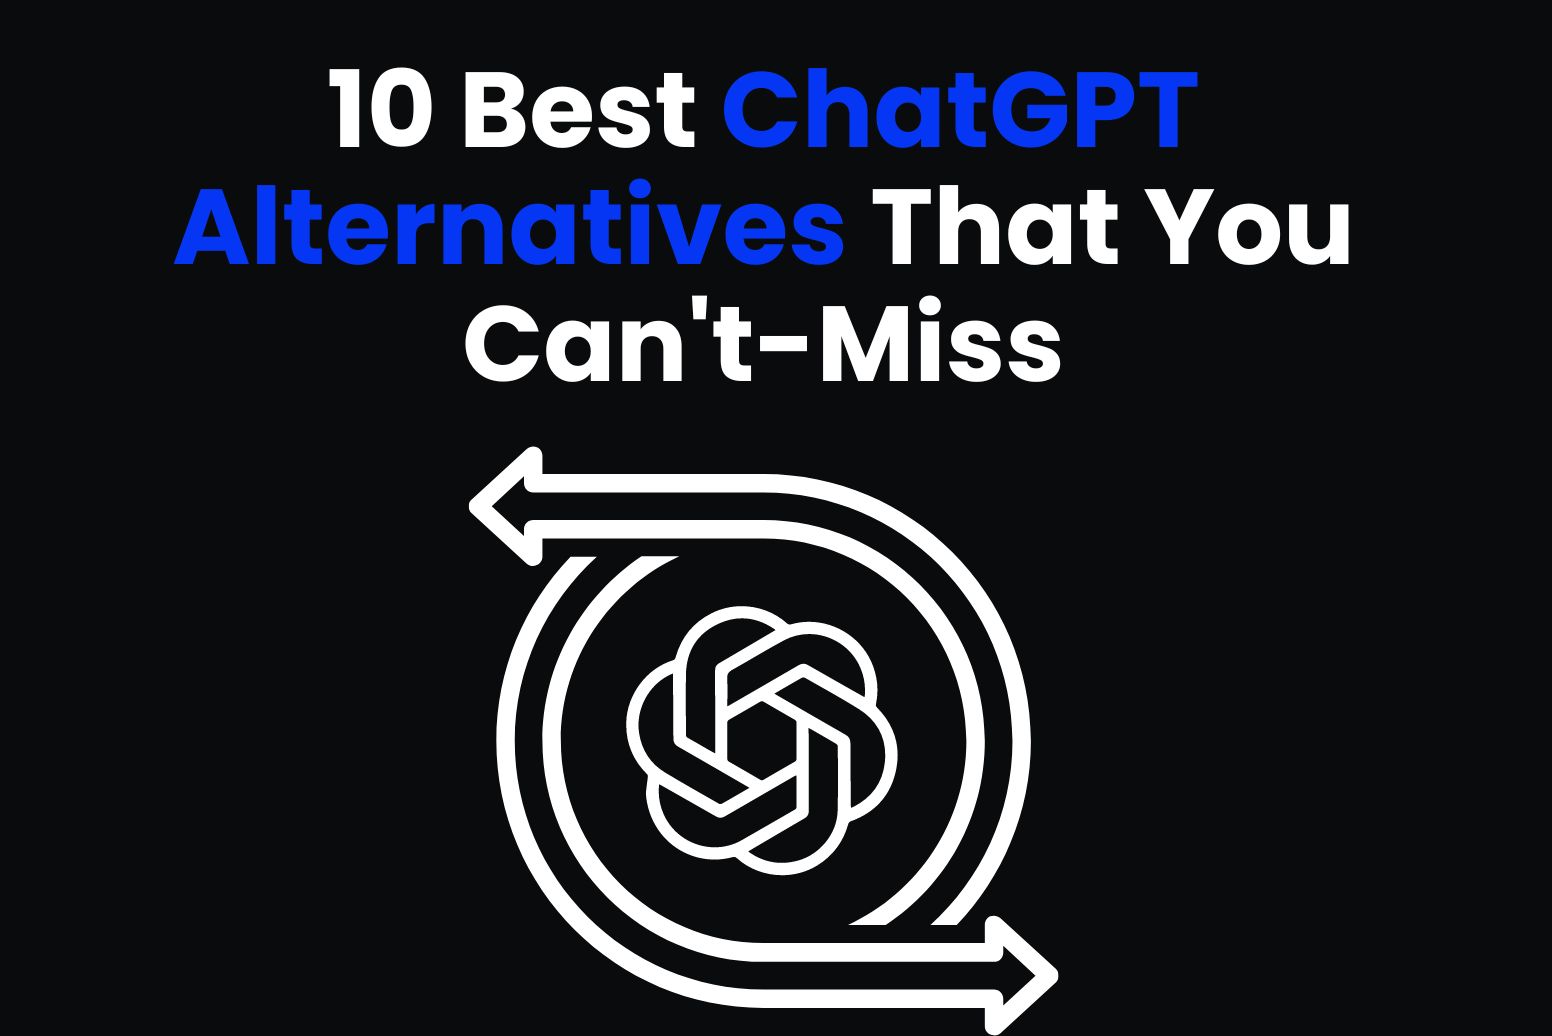 10 best chatgpt alternatives